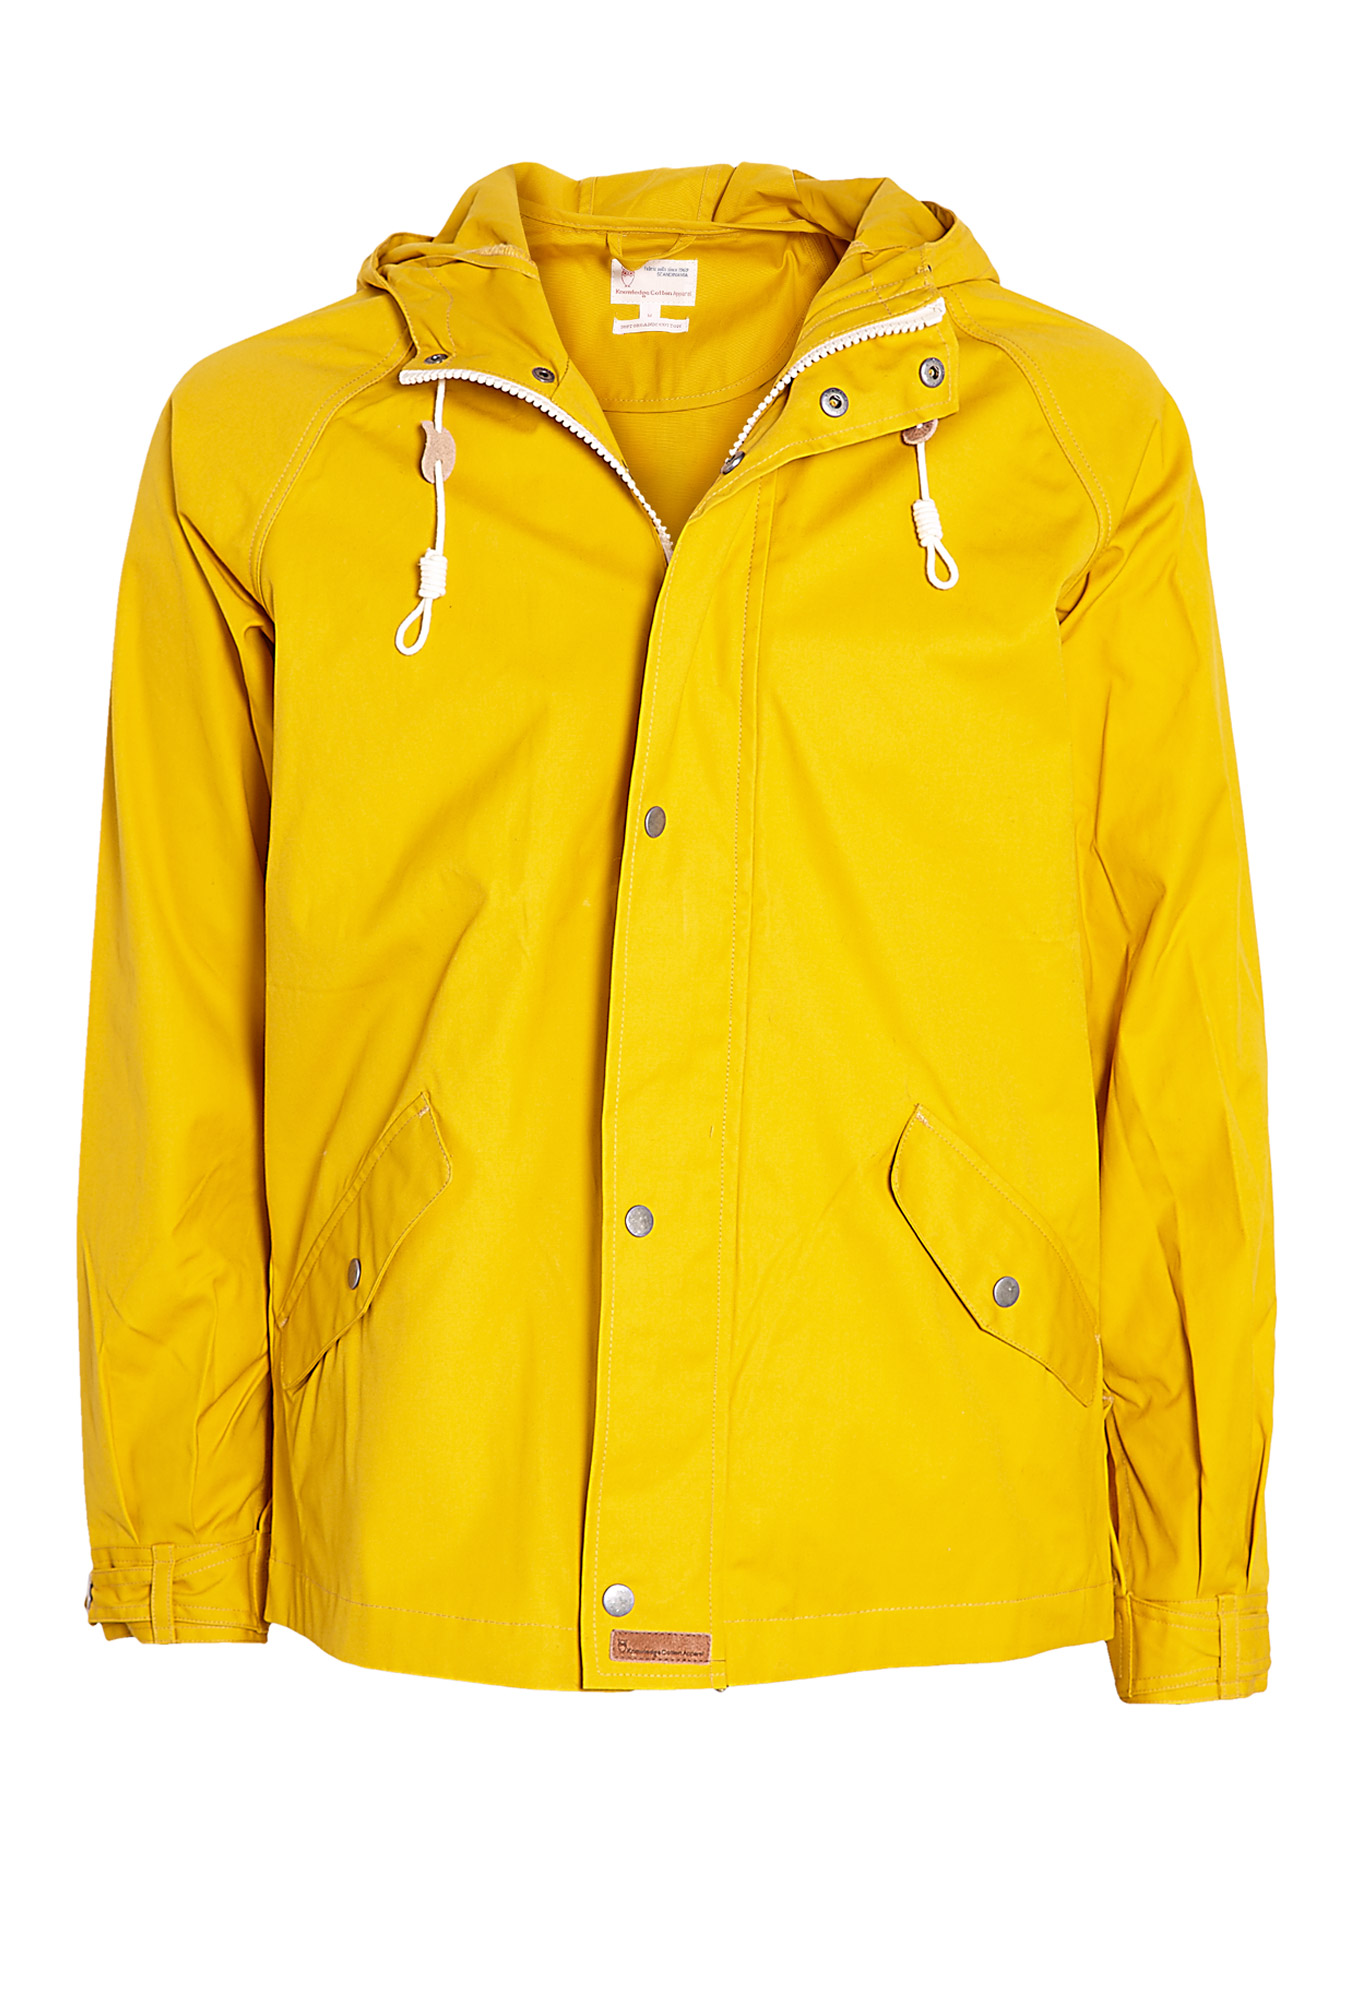 Knowledge Cotton Apparel Yellow Light Wax Canvas Rain Jacket in Yellow